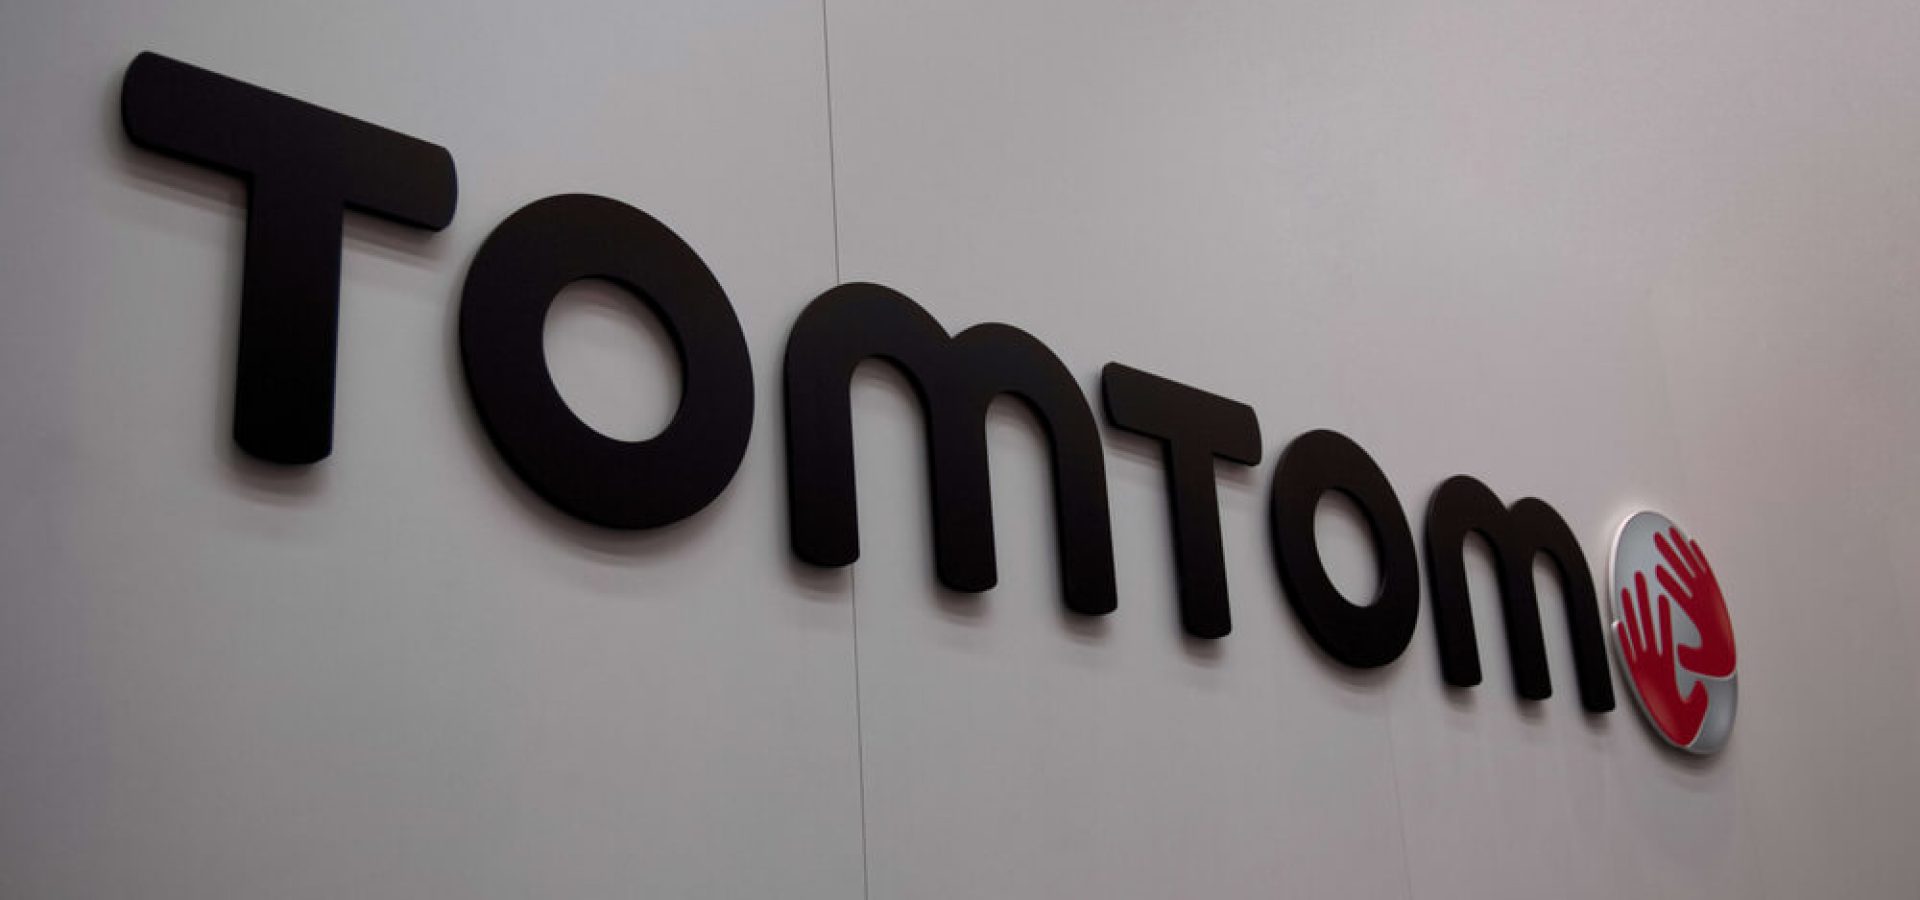 TomTom: The logo of the brand Tomtom.